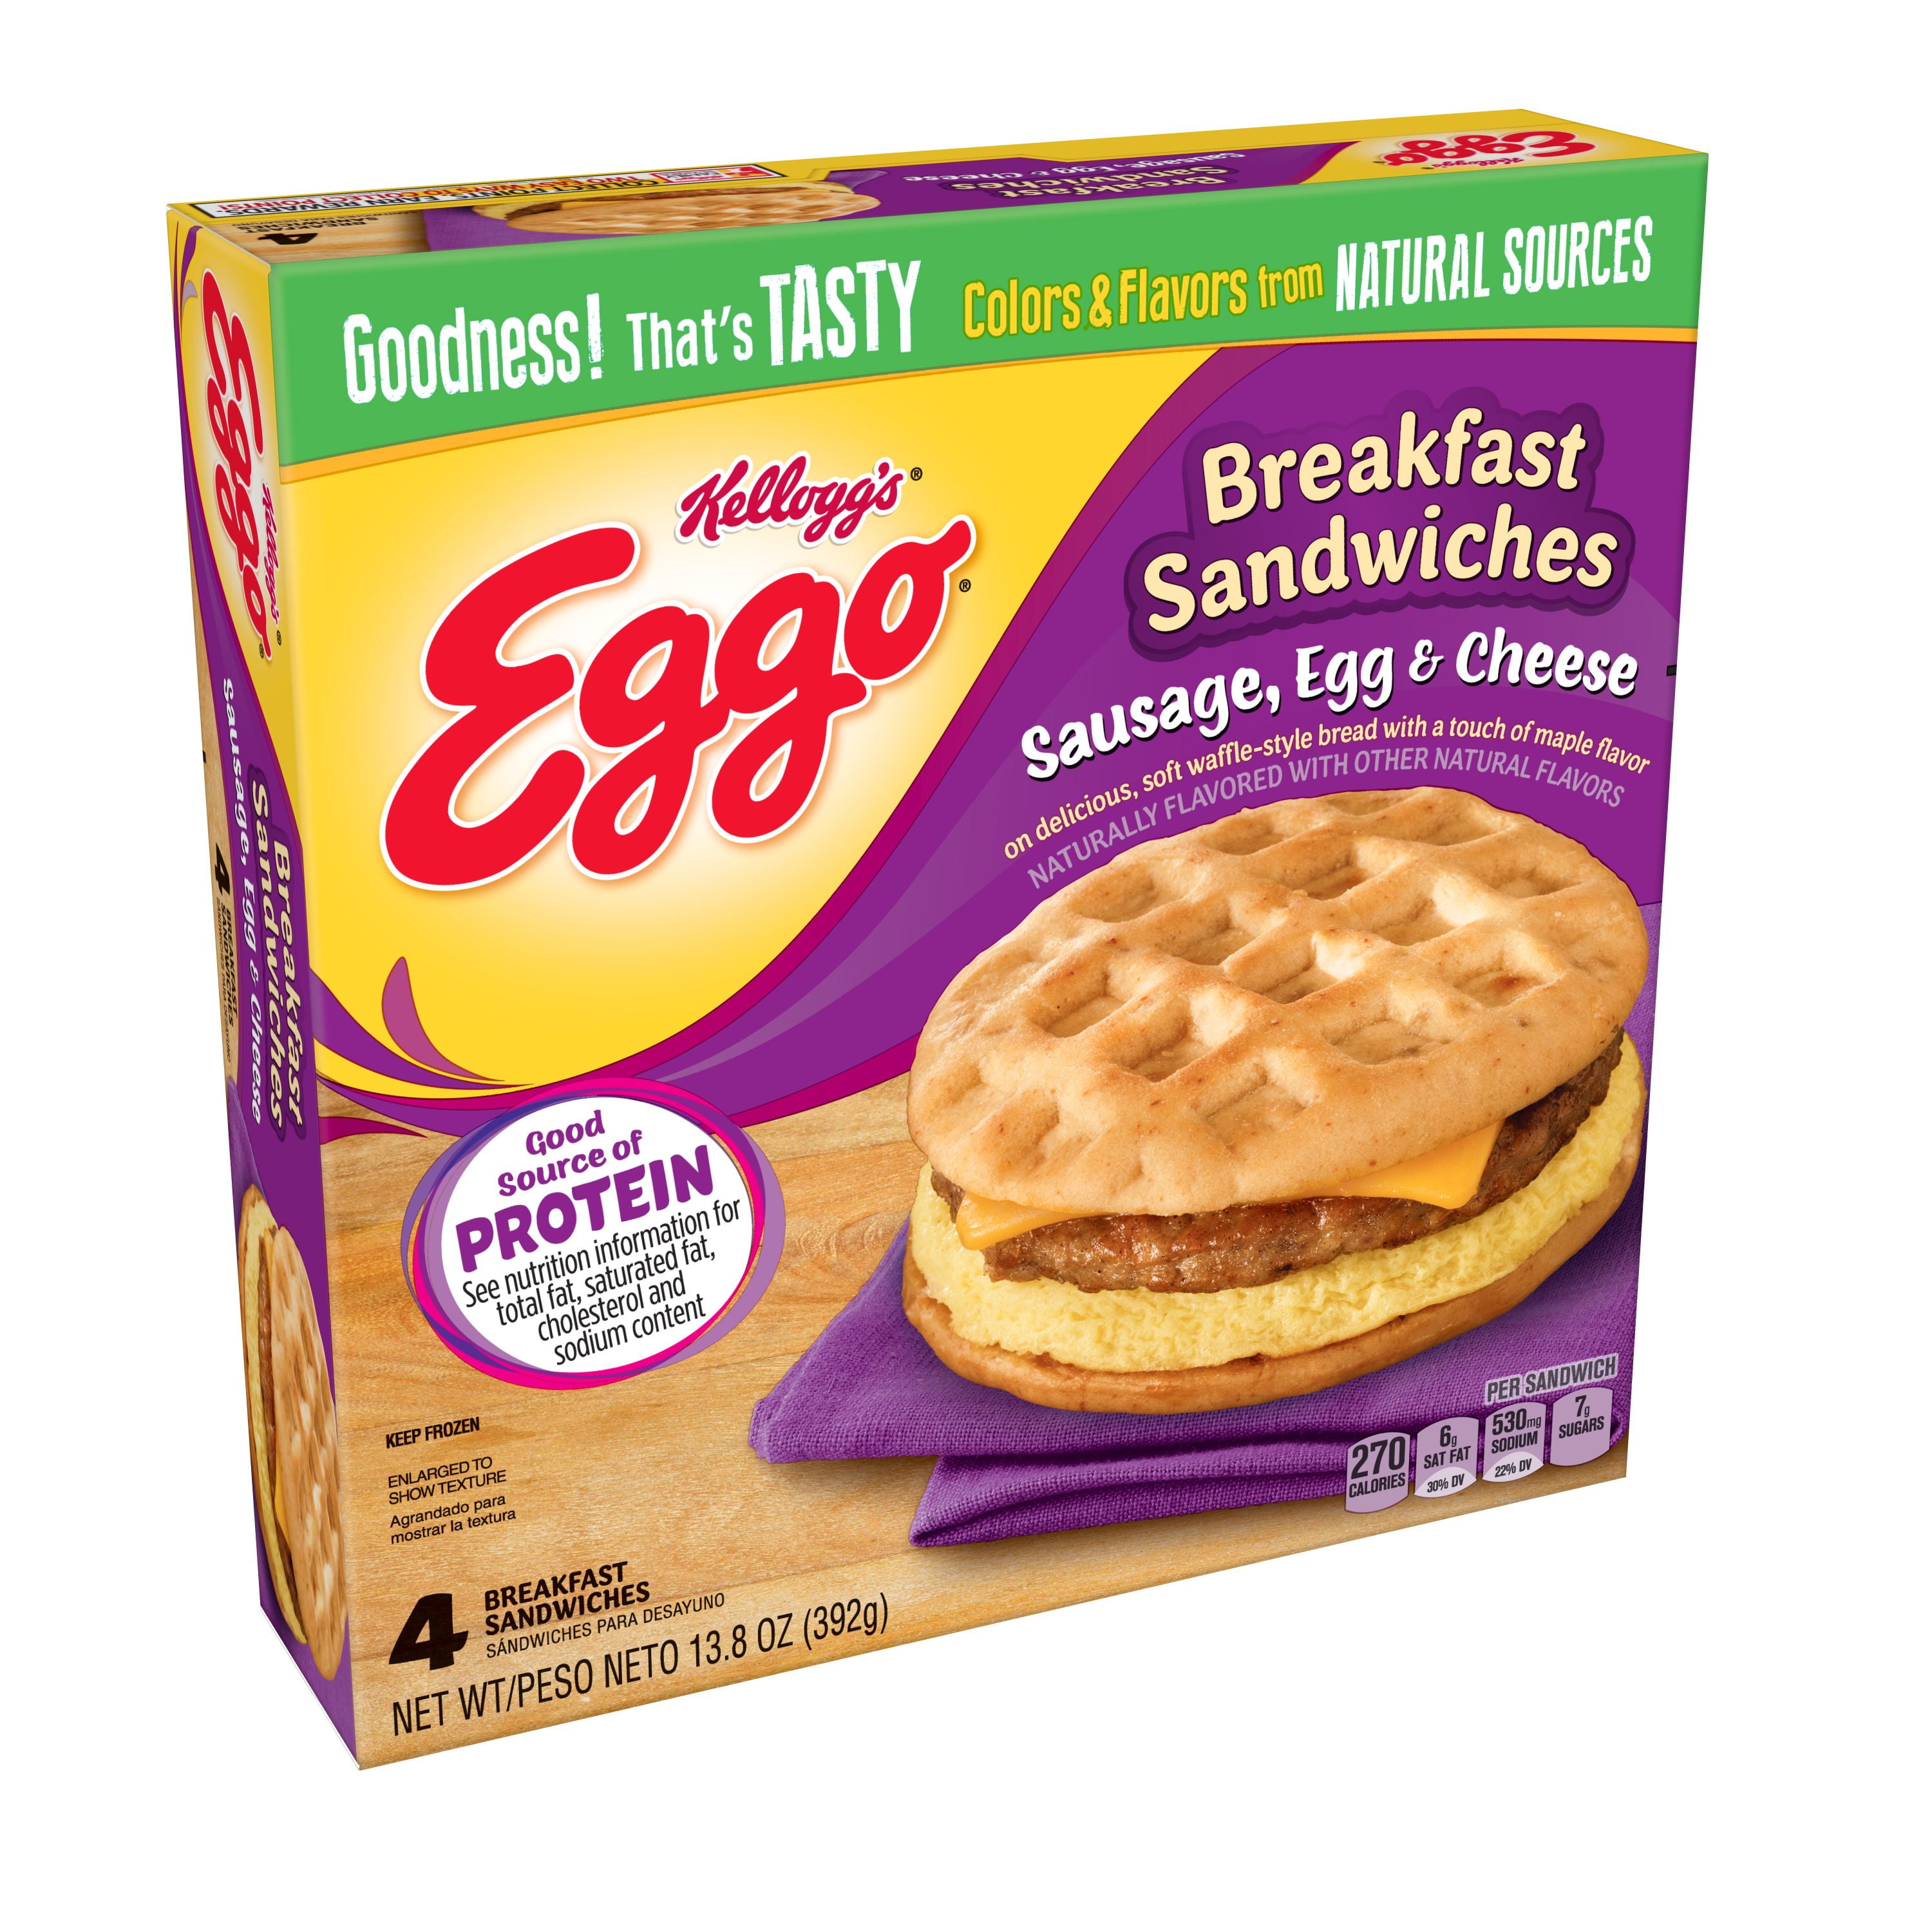 Sausage, Egg, and Cheese Sandwich Recipe - L'Eggo With Eggo®